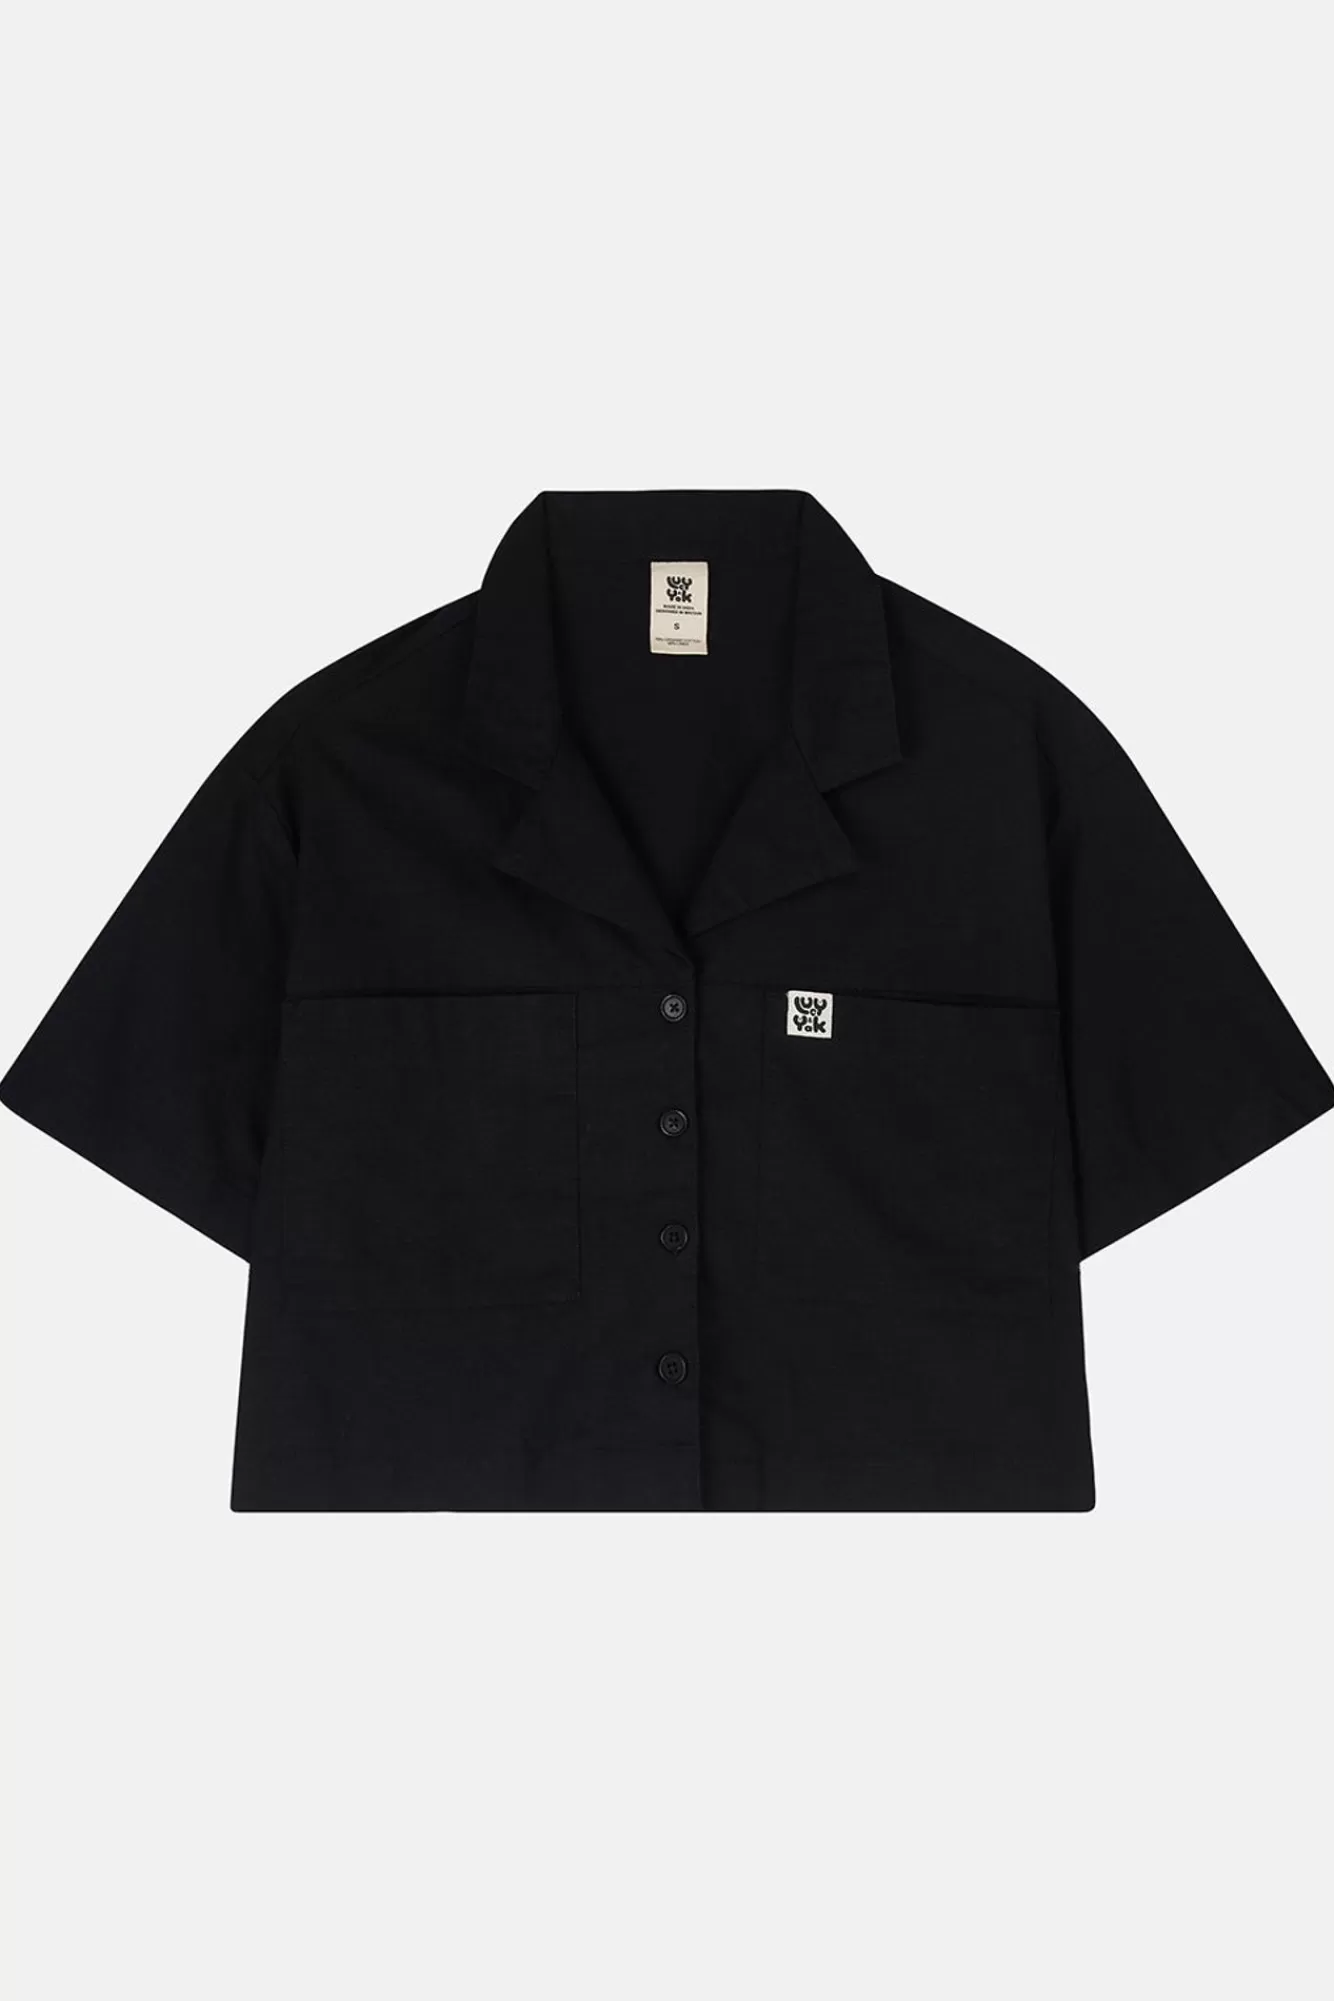 Alfie Shirt: Organic Cotton & Linen - Black-Lucy & Yak New